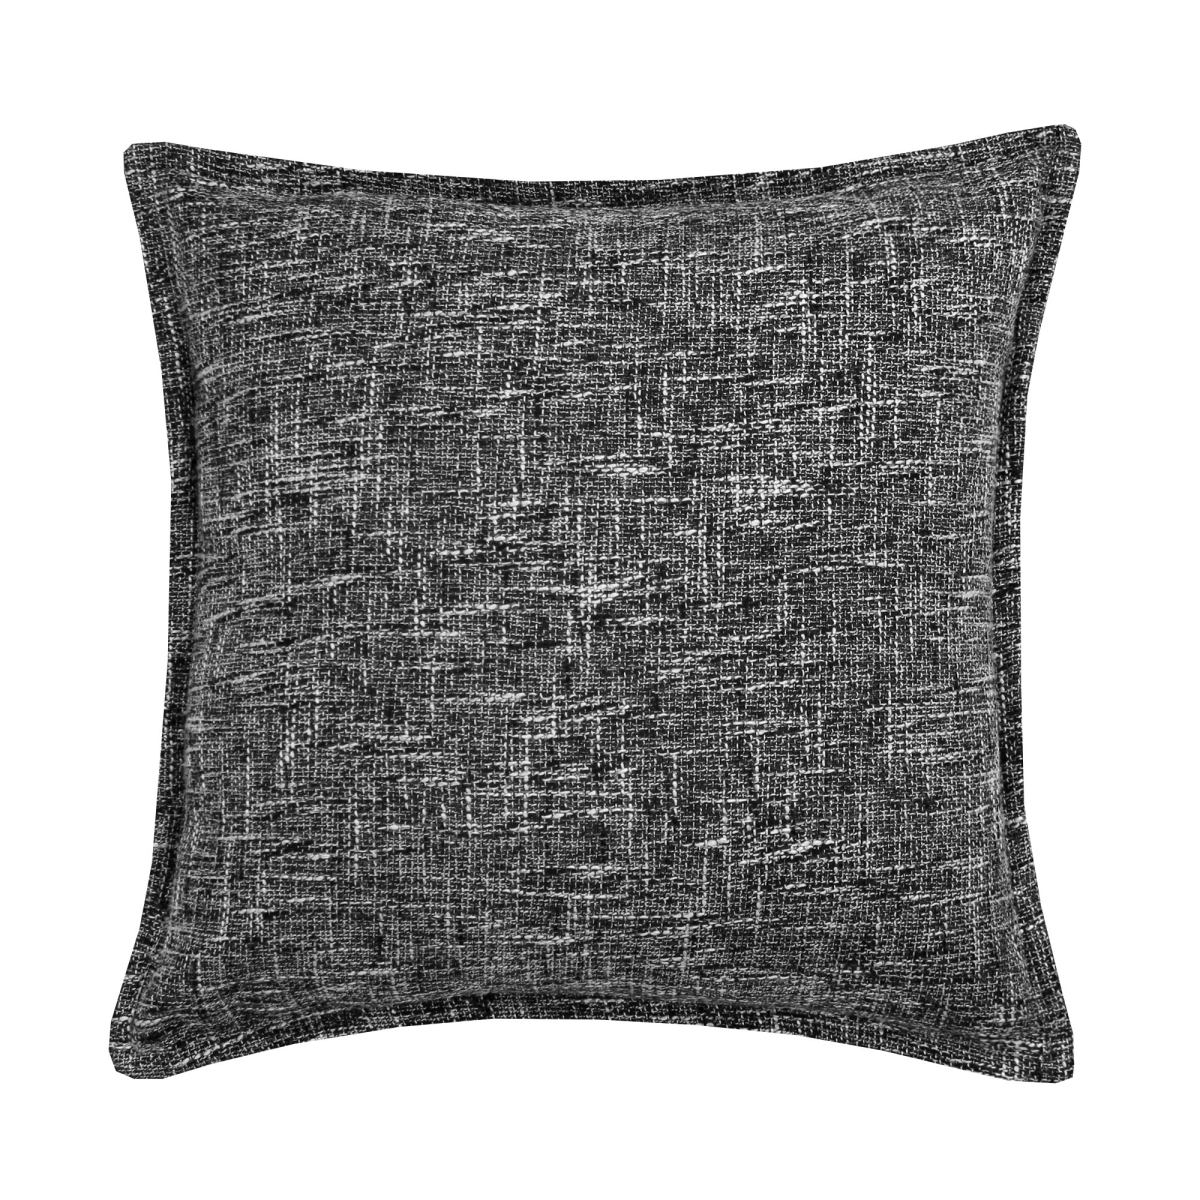 18 X 18 In. Burlap Cushion Cover - Grey